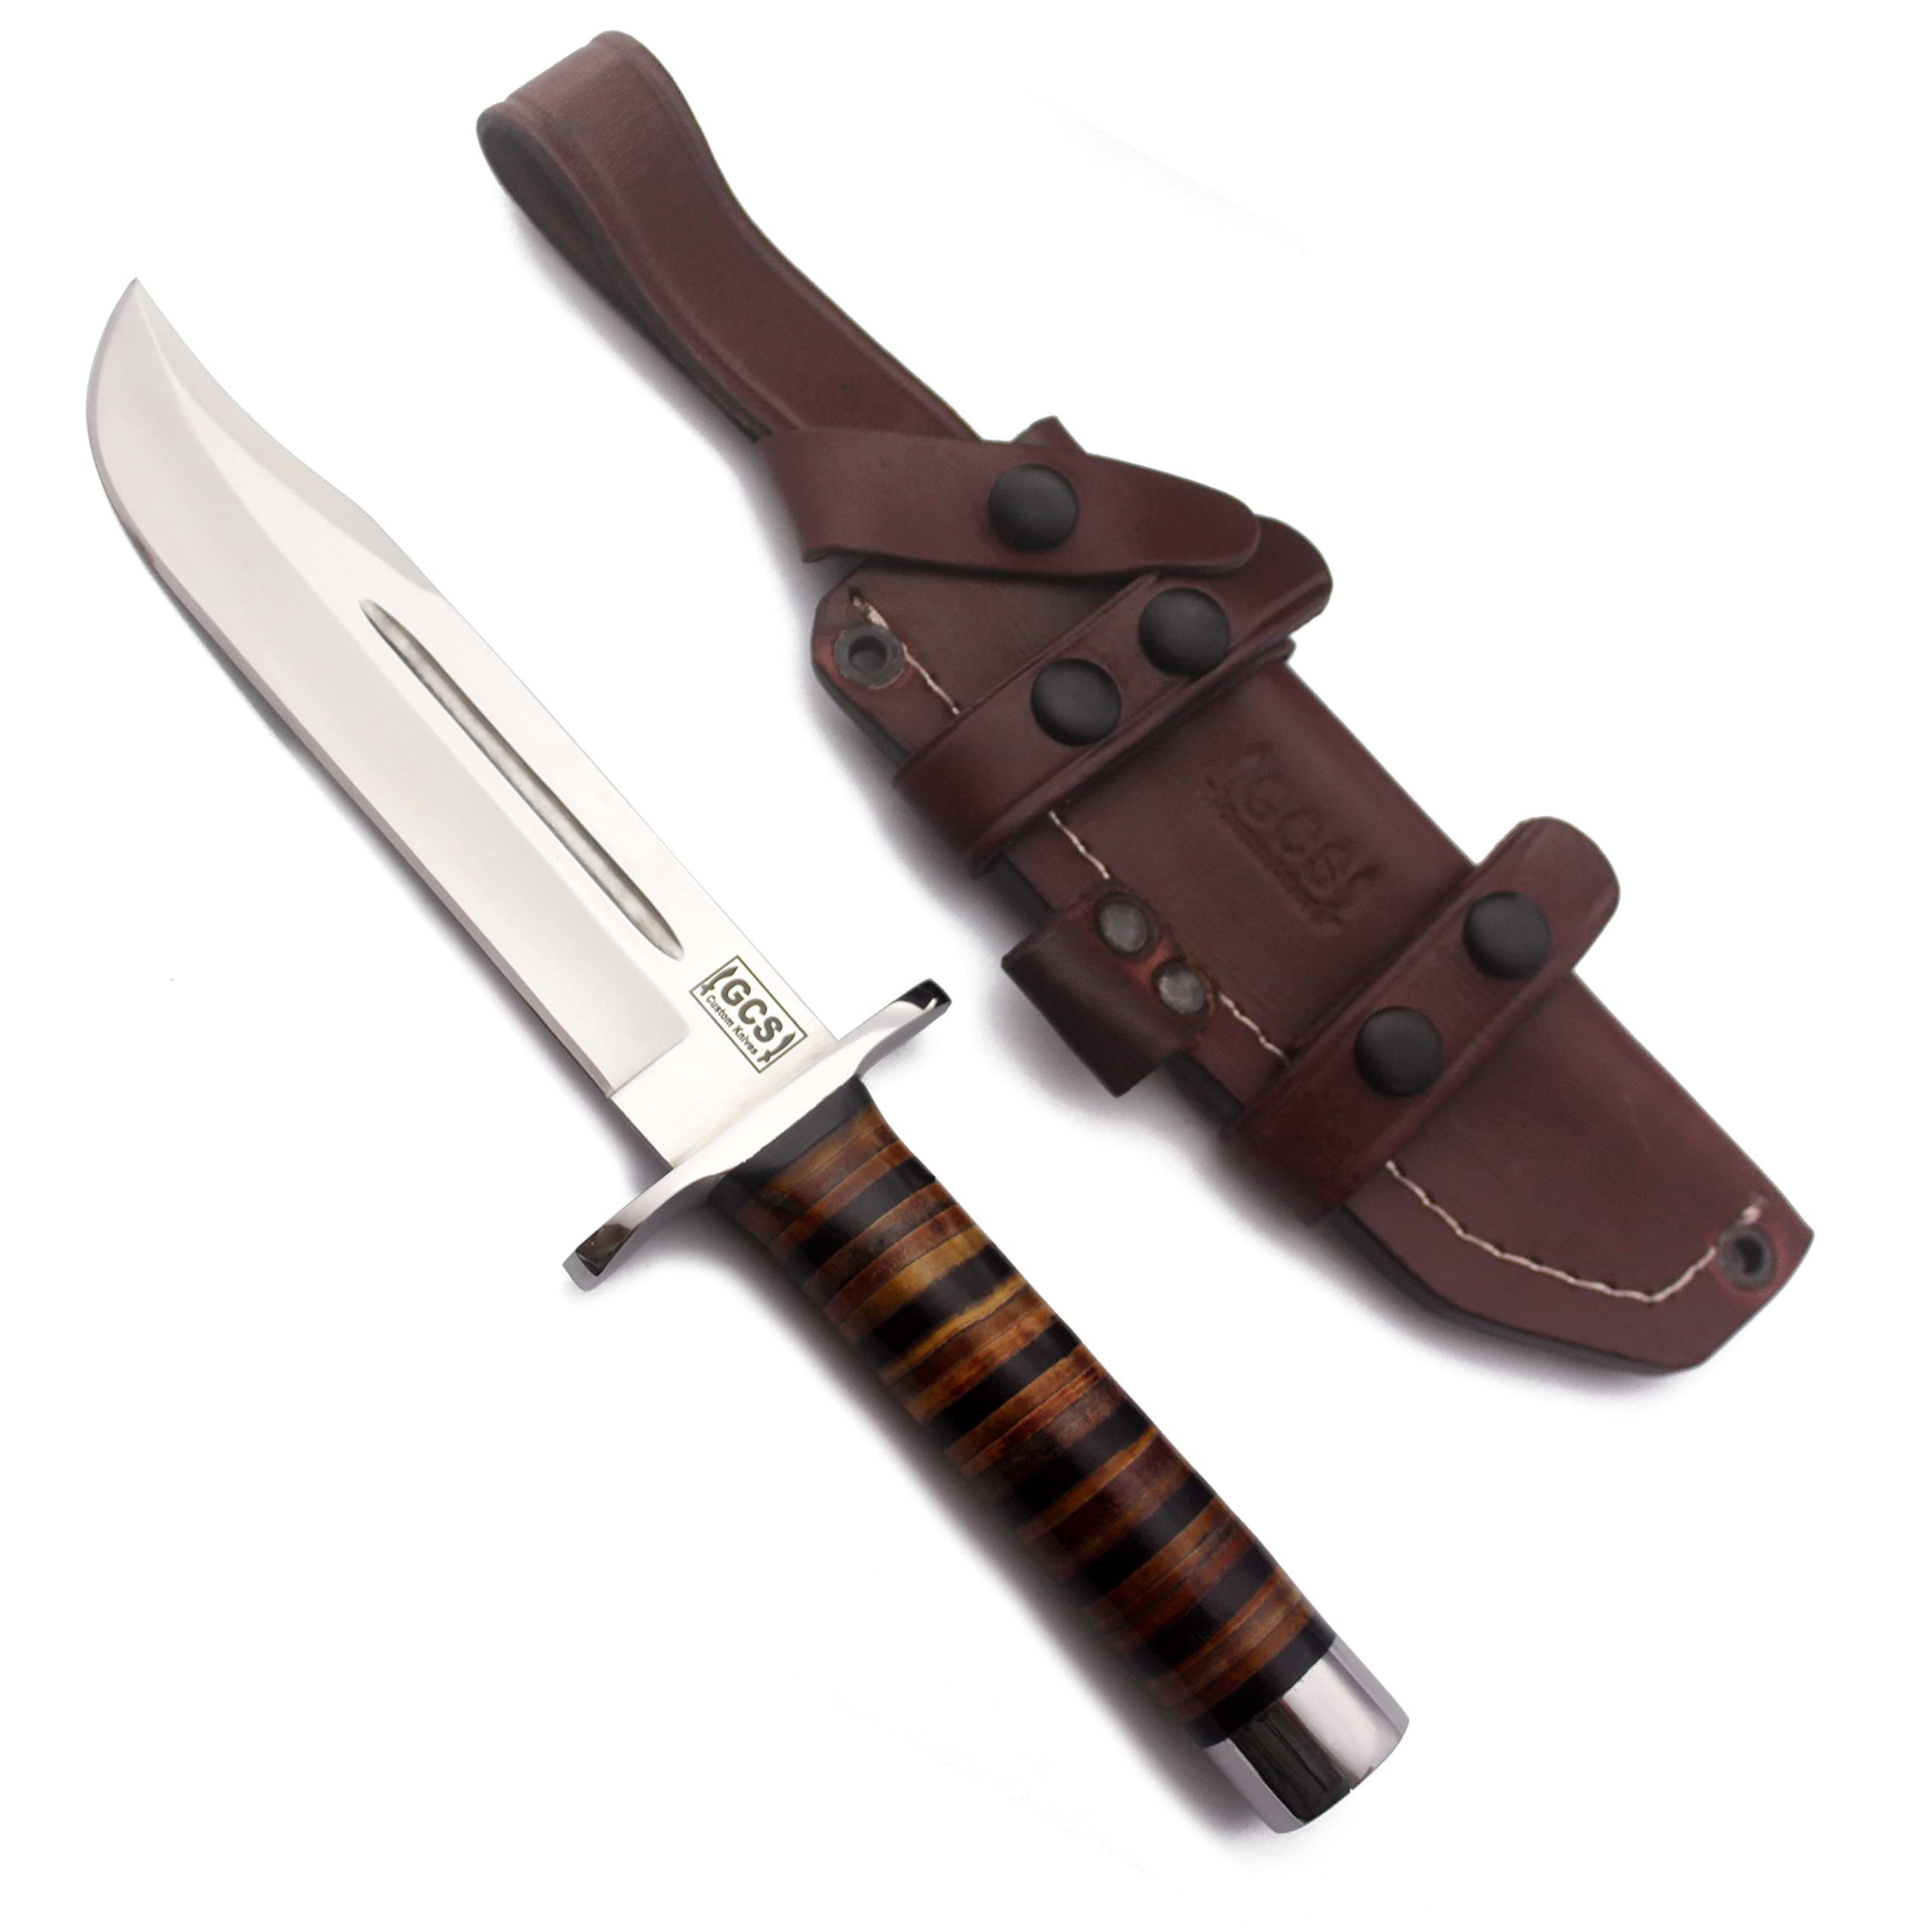 GCS Custom handmade Leather Sheath for Hunting knife Survival